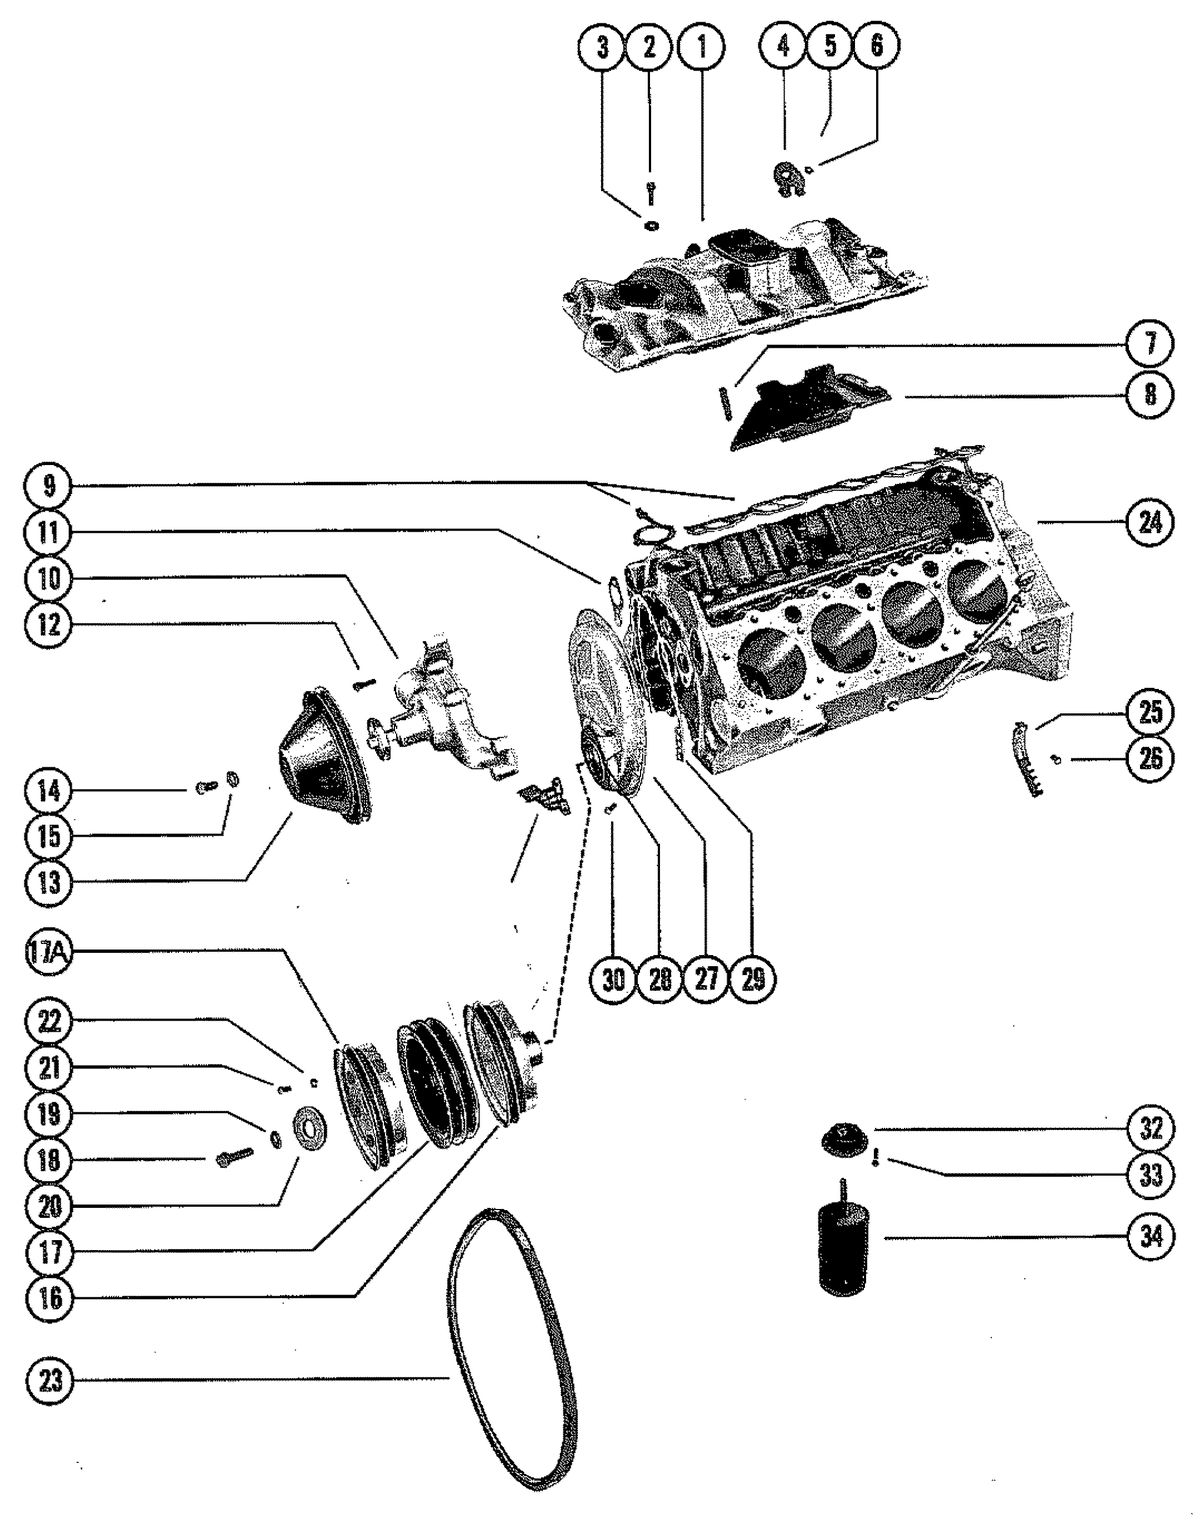 MERCRUISER 898 (STERN DRIVE) 198 (INBOARD) ENGINE INTAKE MANIFOLD